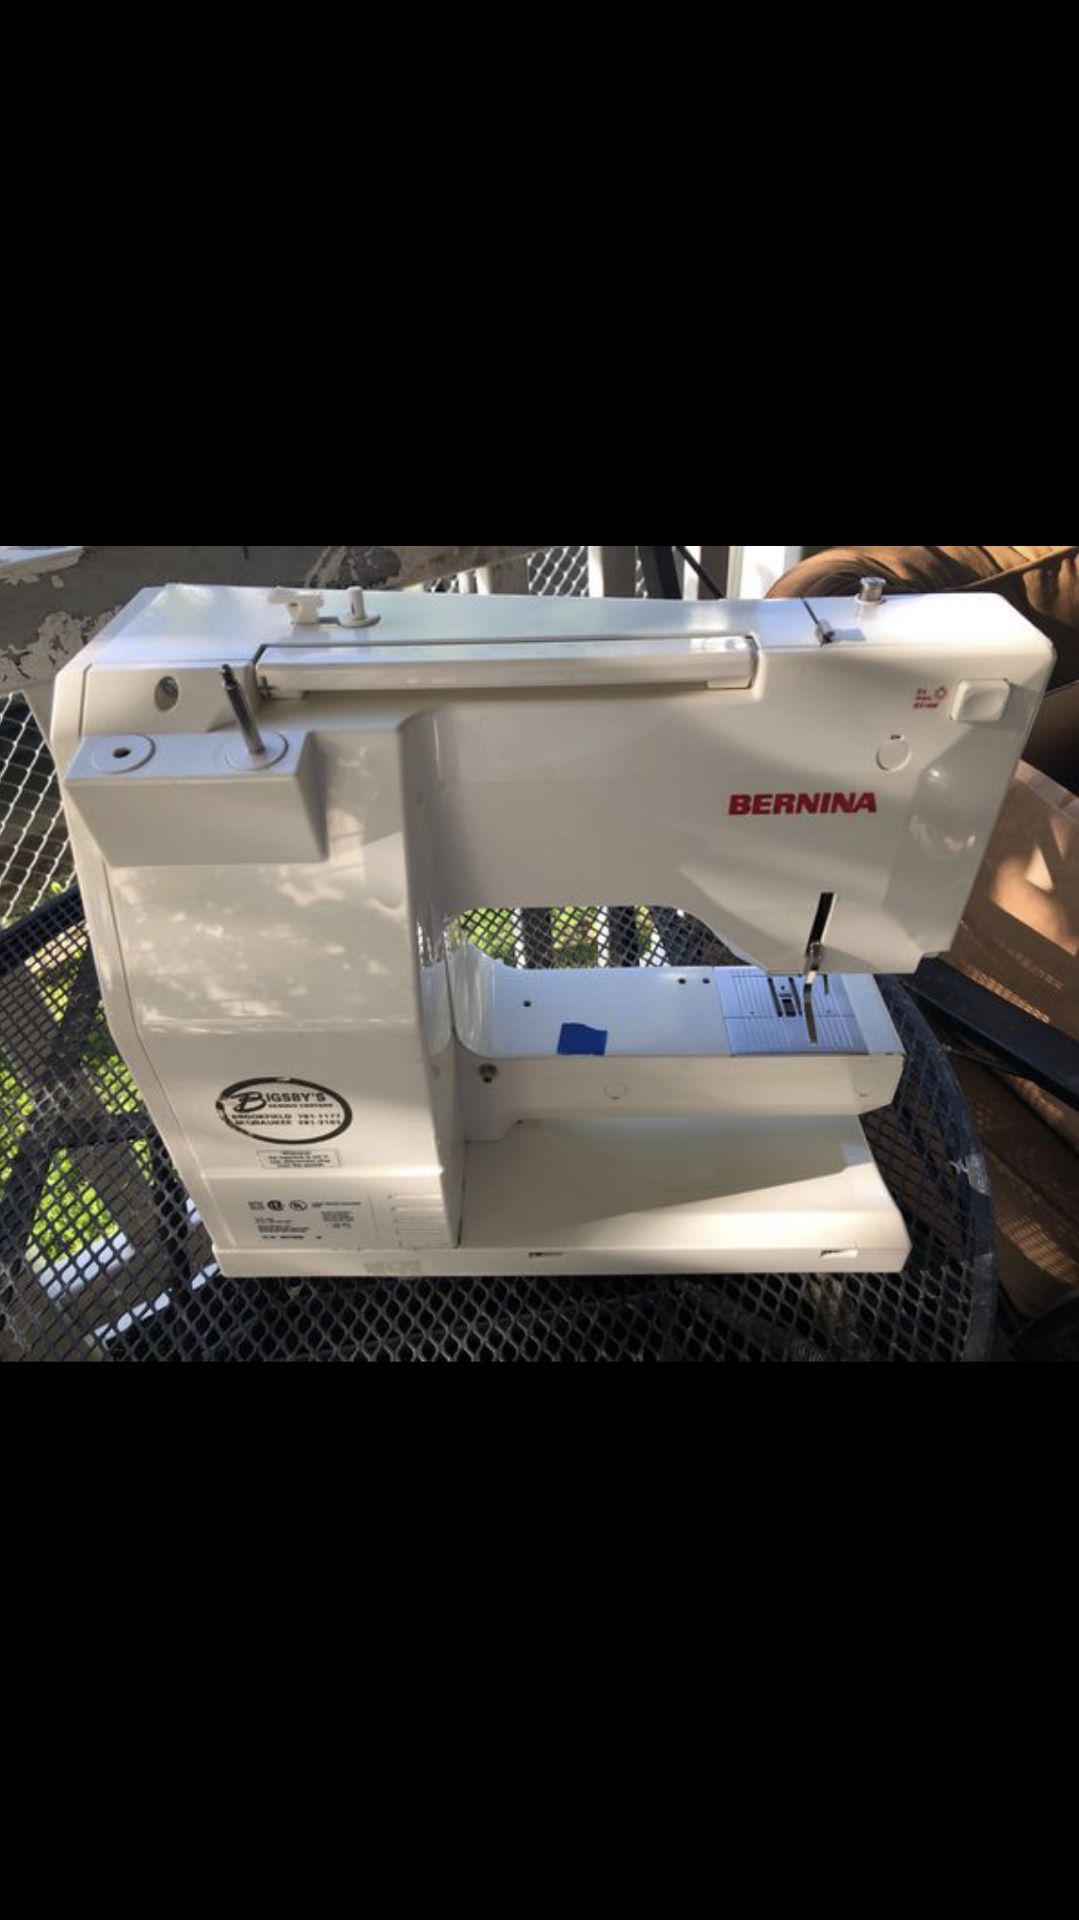 Berlina Sewing Machine 1090 S